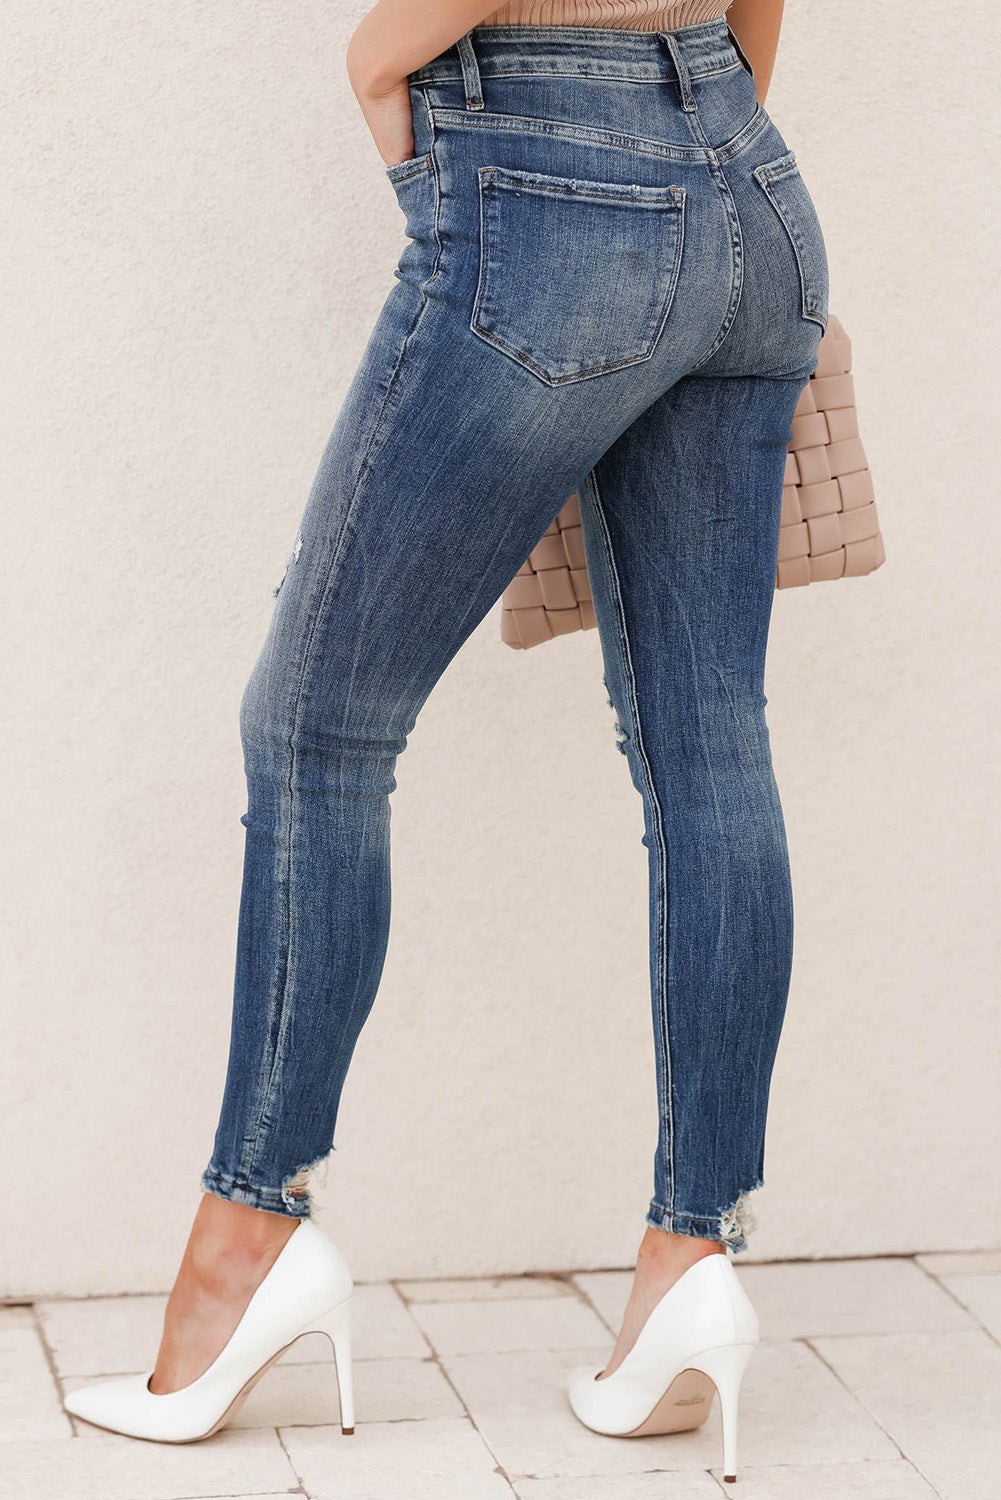 Sky Blue Asymmetric Distressed Skinny Womens Jeans - US2EInc Apparel Plug Ltd. Co